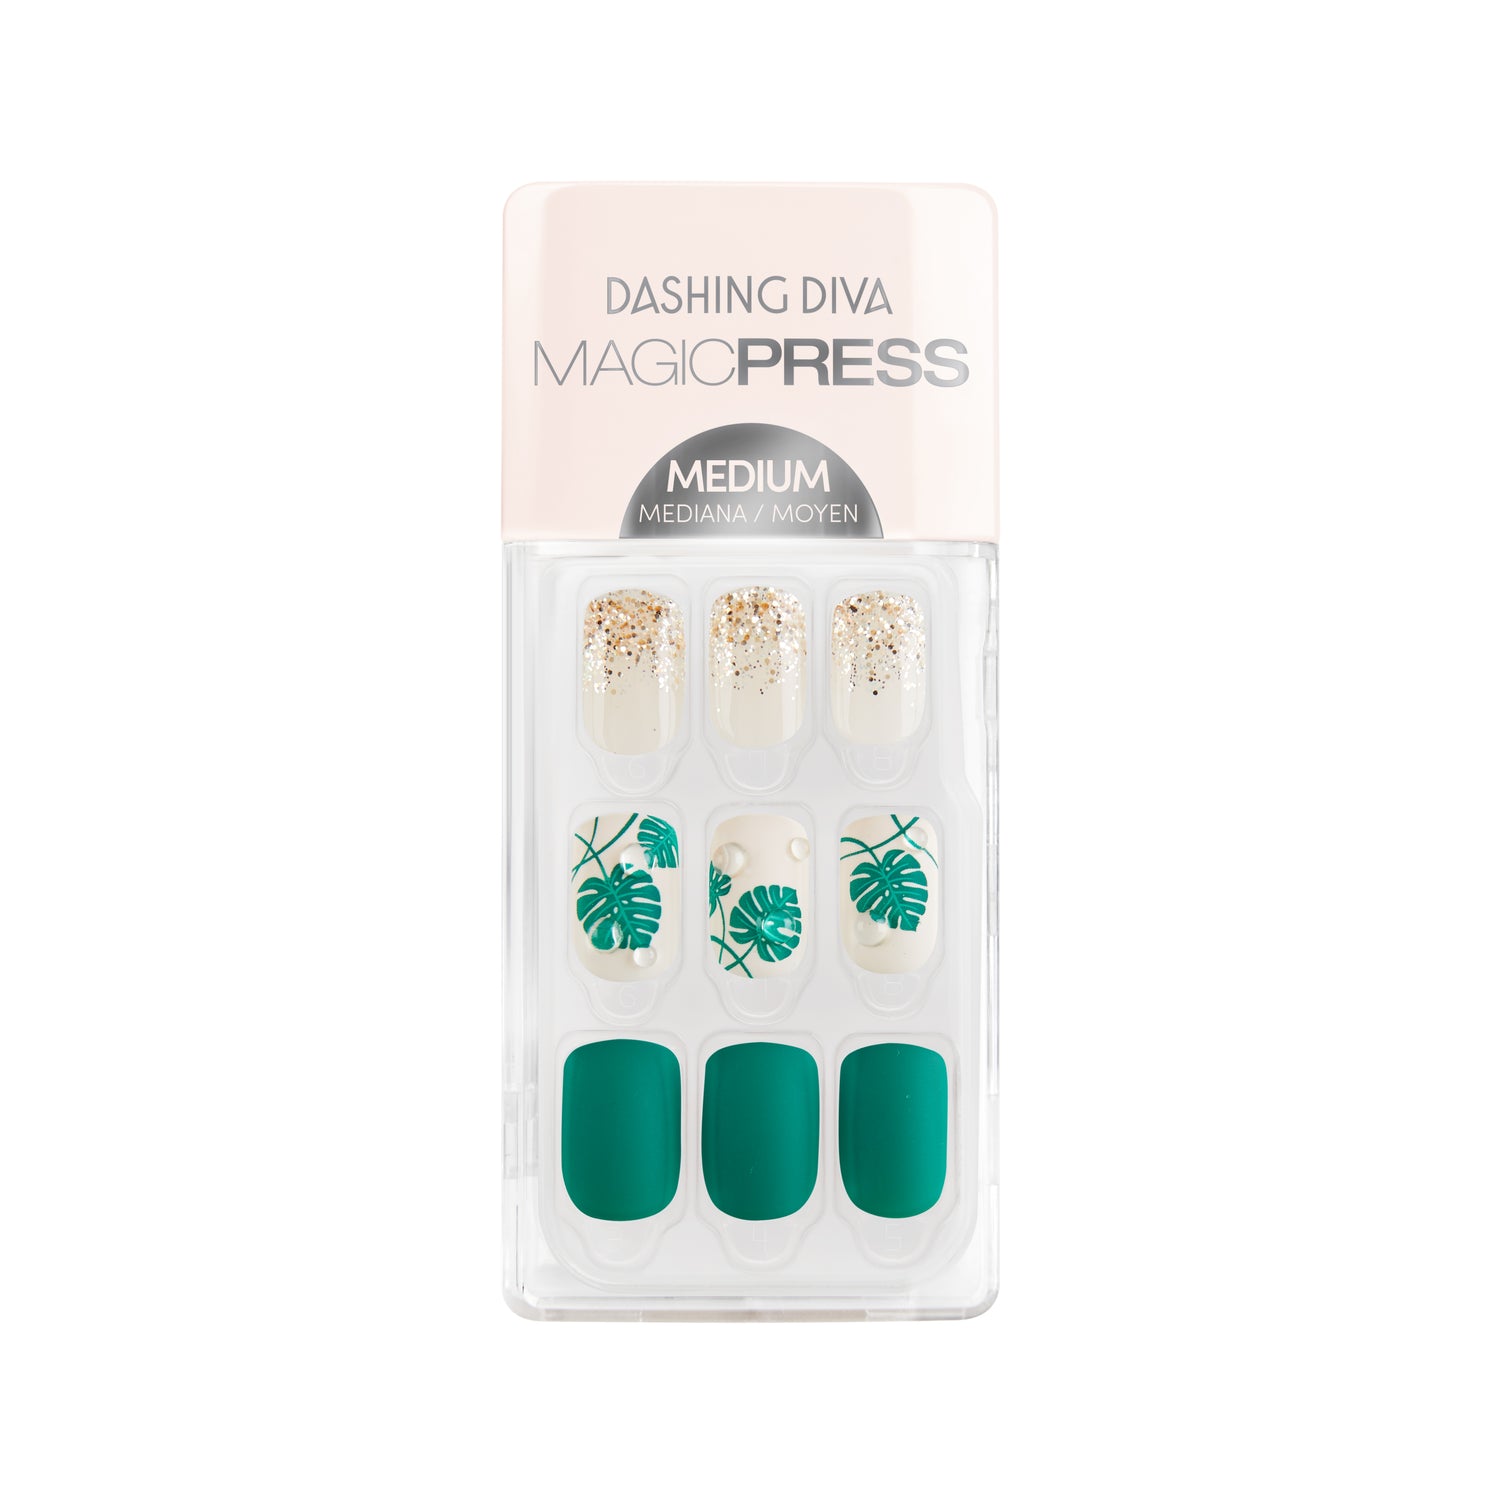 Dashing Diva MAGIC PRESS medium, square green MAGIC PRESS nails with tropical palm leaf & glitter accents.